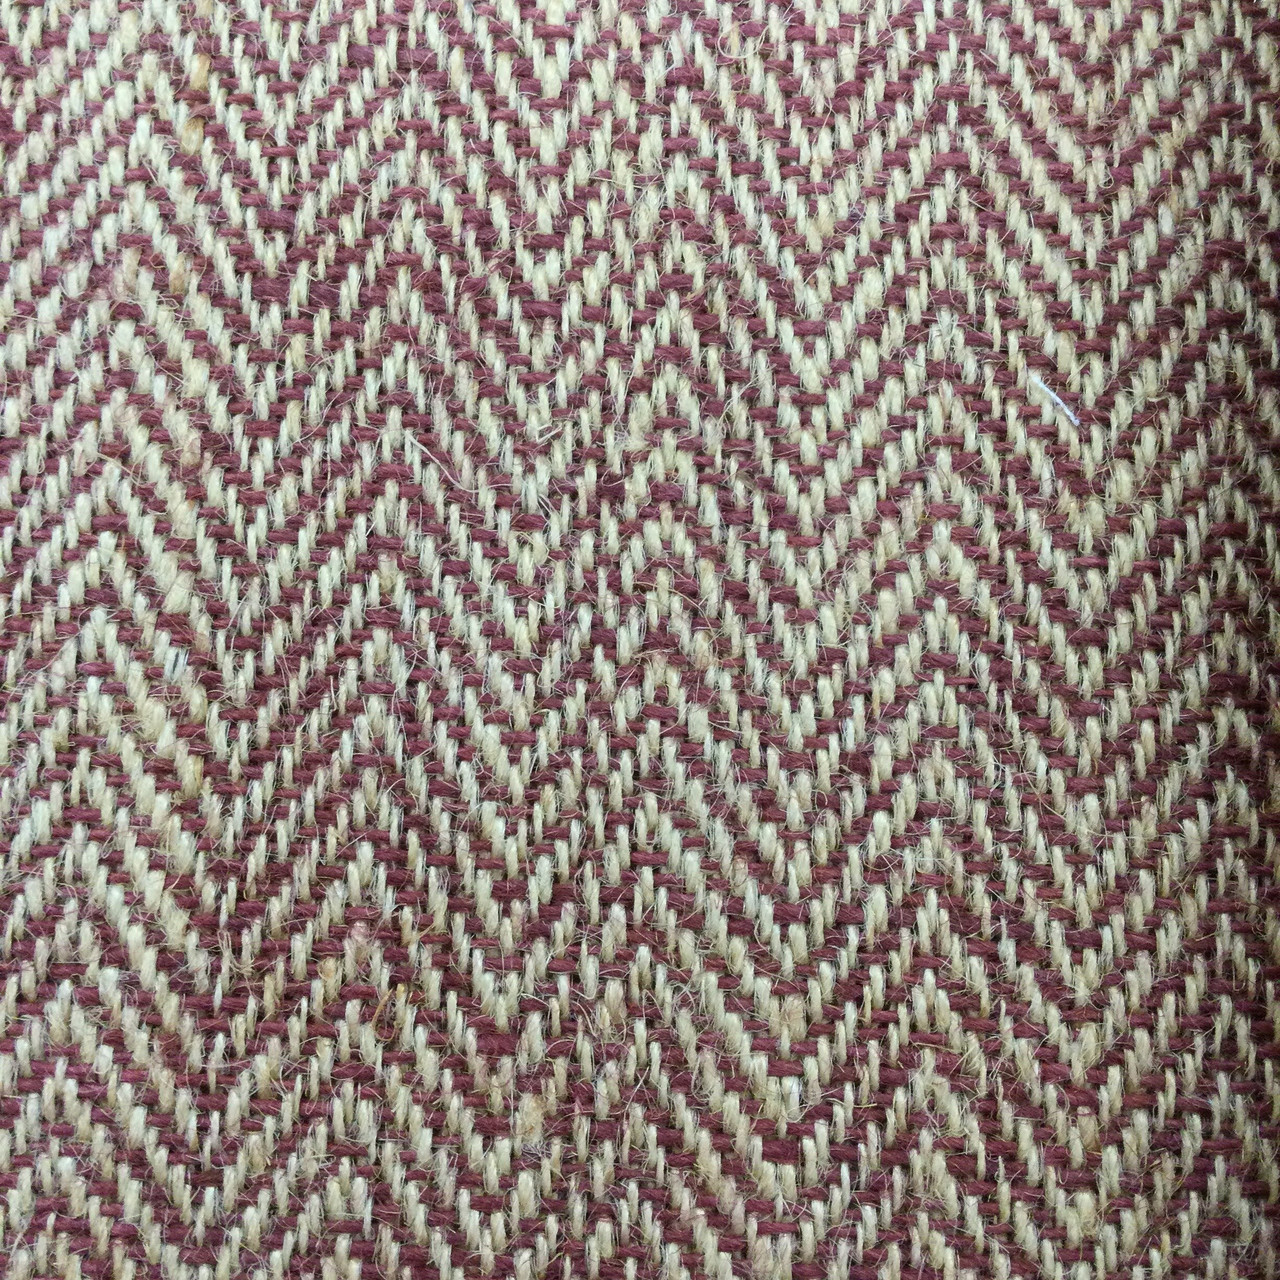 48 Wide Purple Burlap Fabric Per Yard